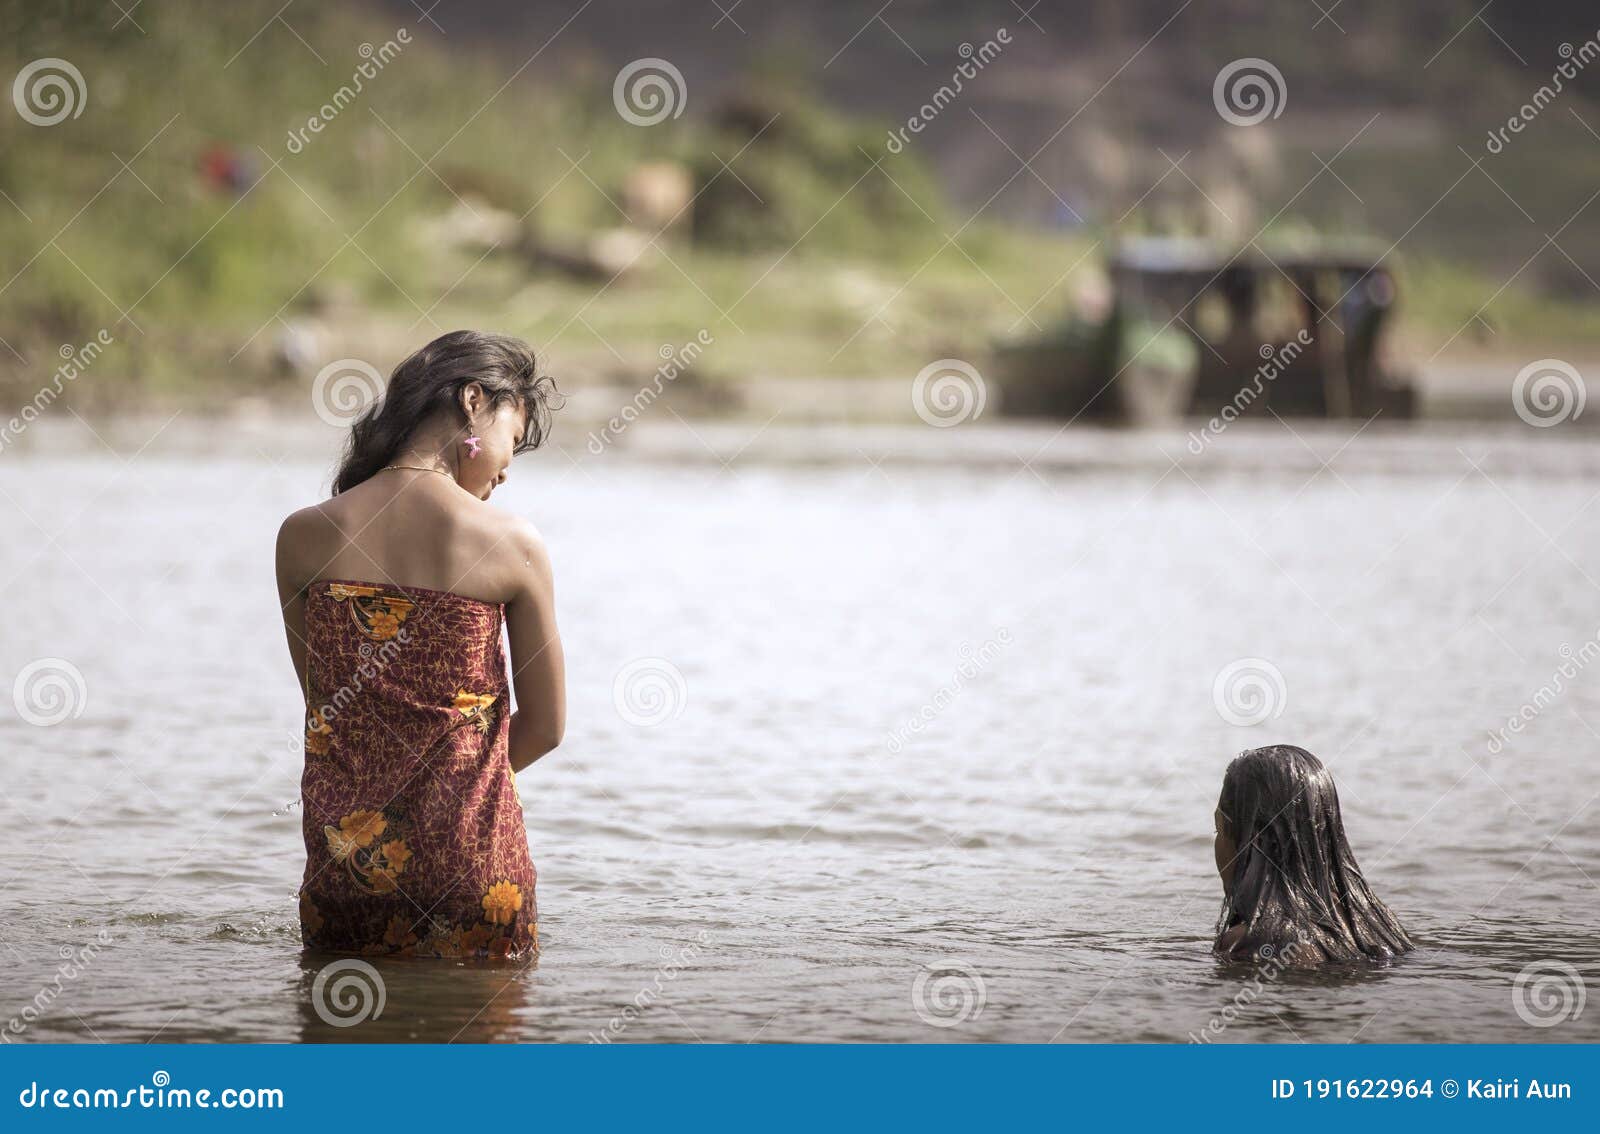 Bangali girl bathing